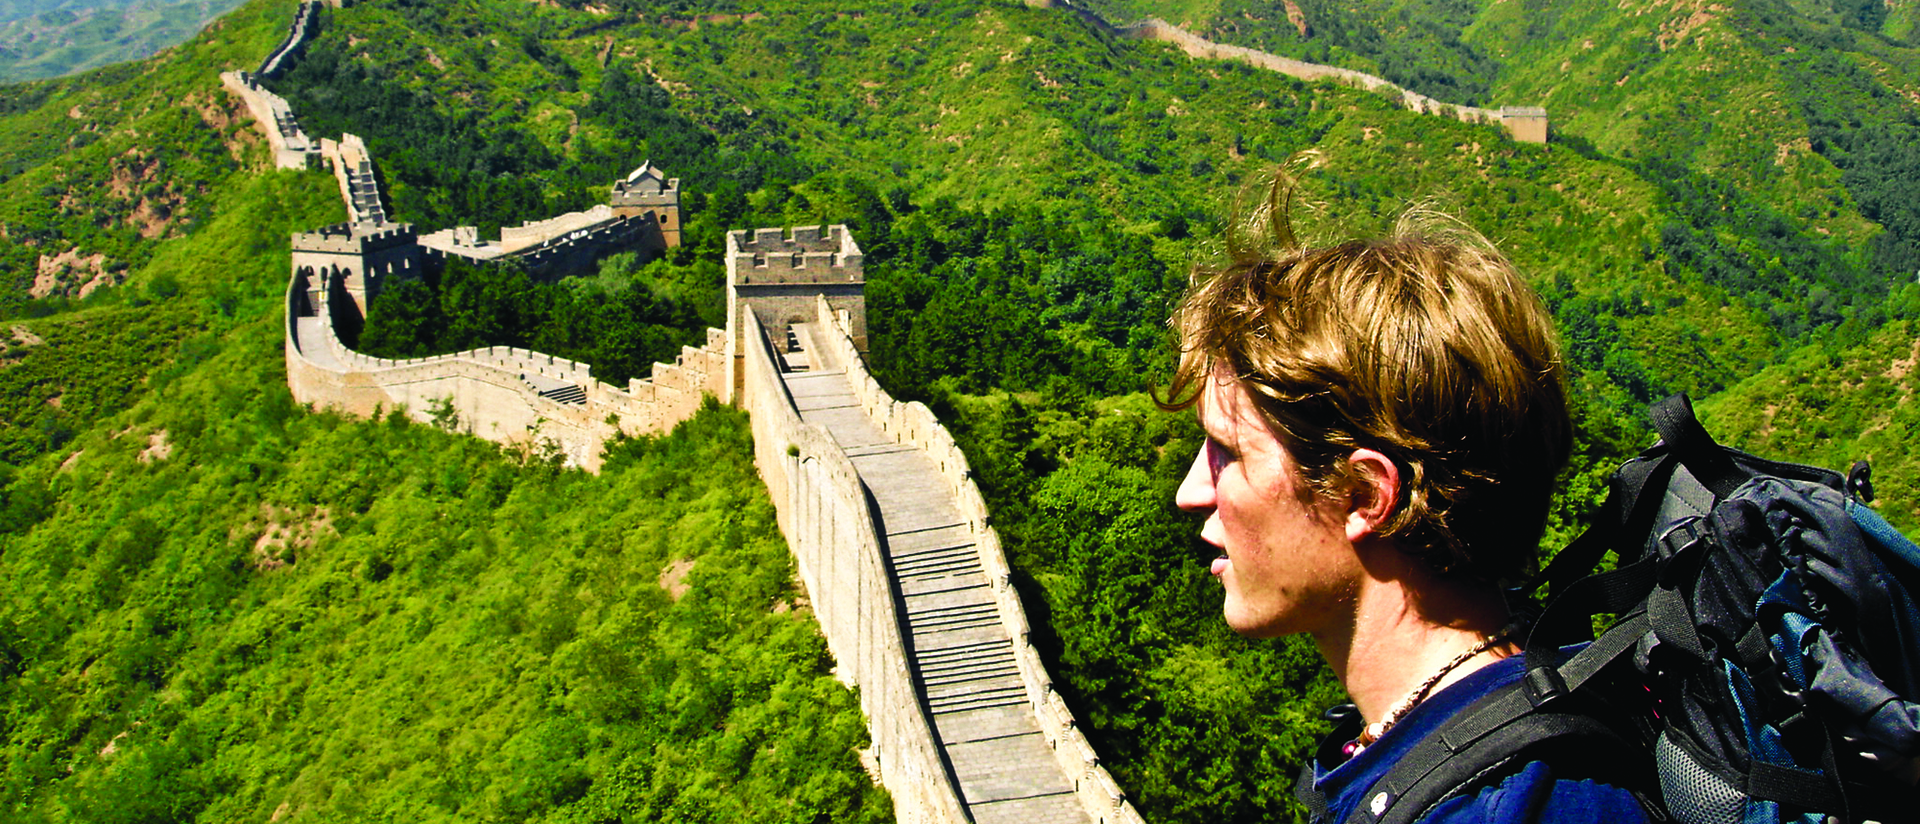 UWEC student at the Great Wall of China